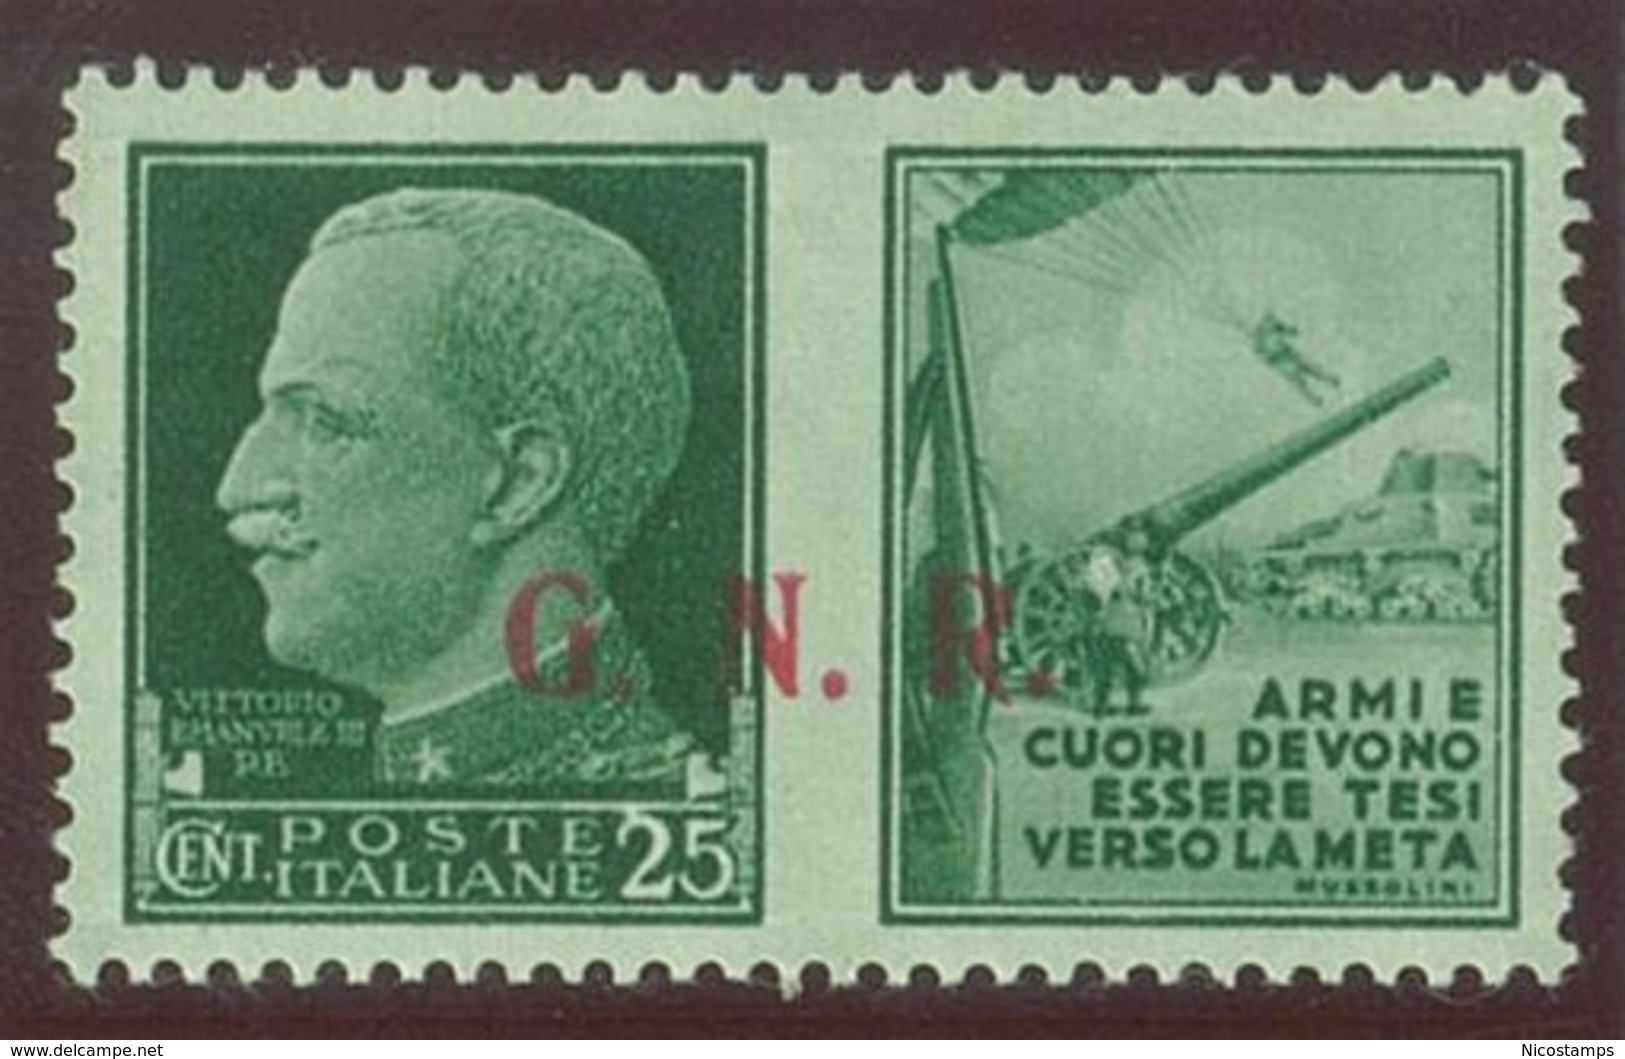 ITALIA REPUBBLICA SOCIALE ITALIANA (R.S.I.) SASS. P.G. 14/IIIed  NUOVO - War Propaganda